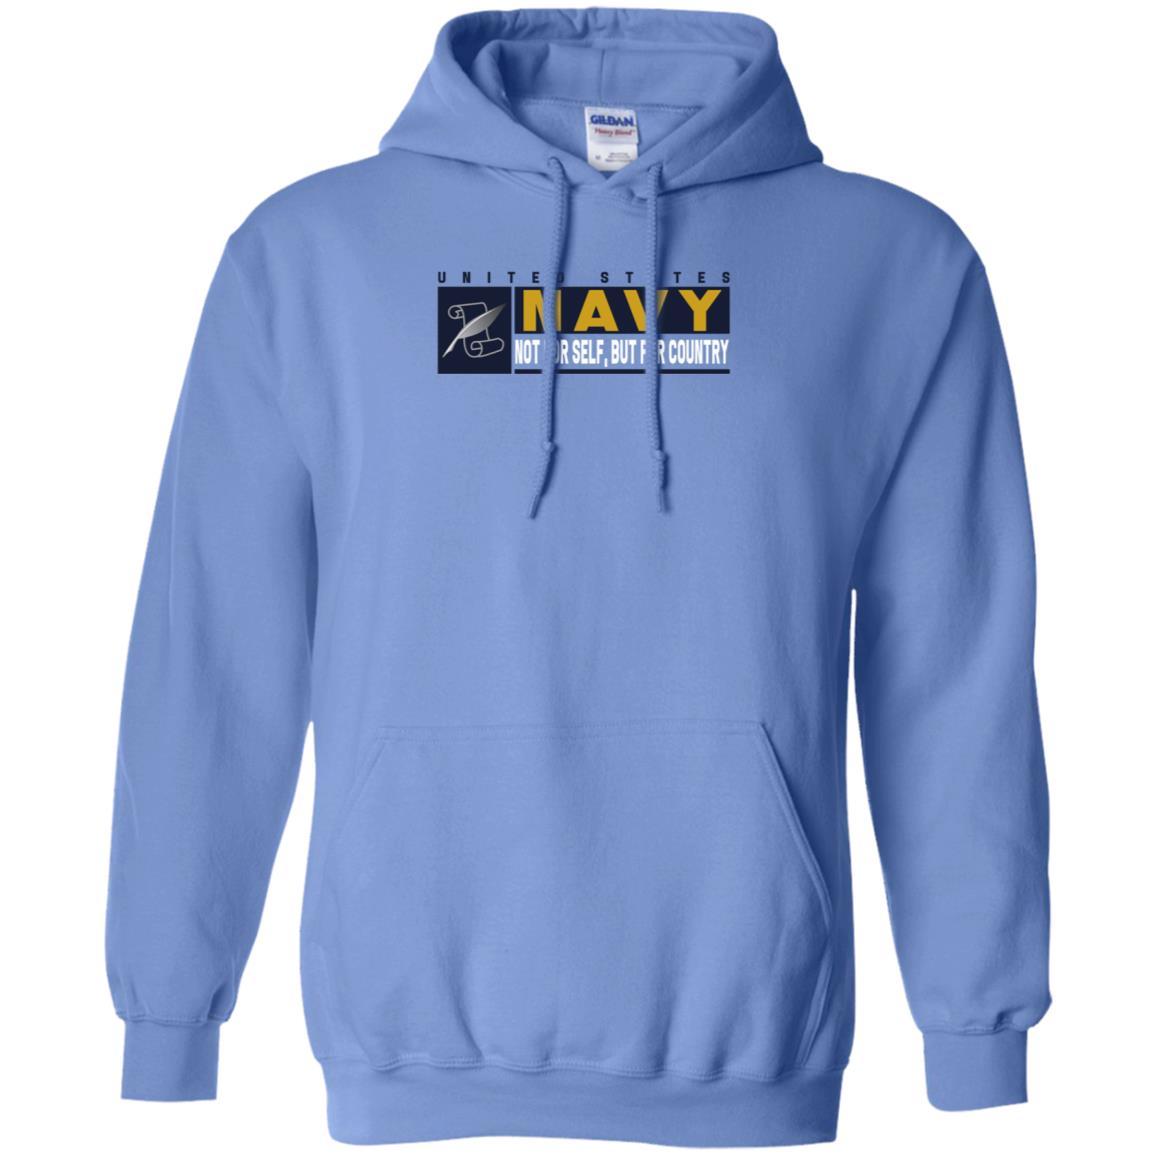 Navy Journalist Navy JO- Not for self Long Sleeve - Pullover Hoodie-TShirt-Navy-Veterans Nation